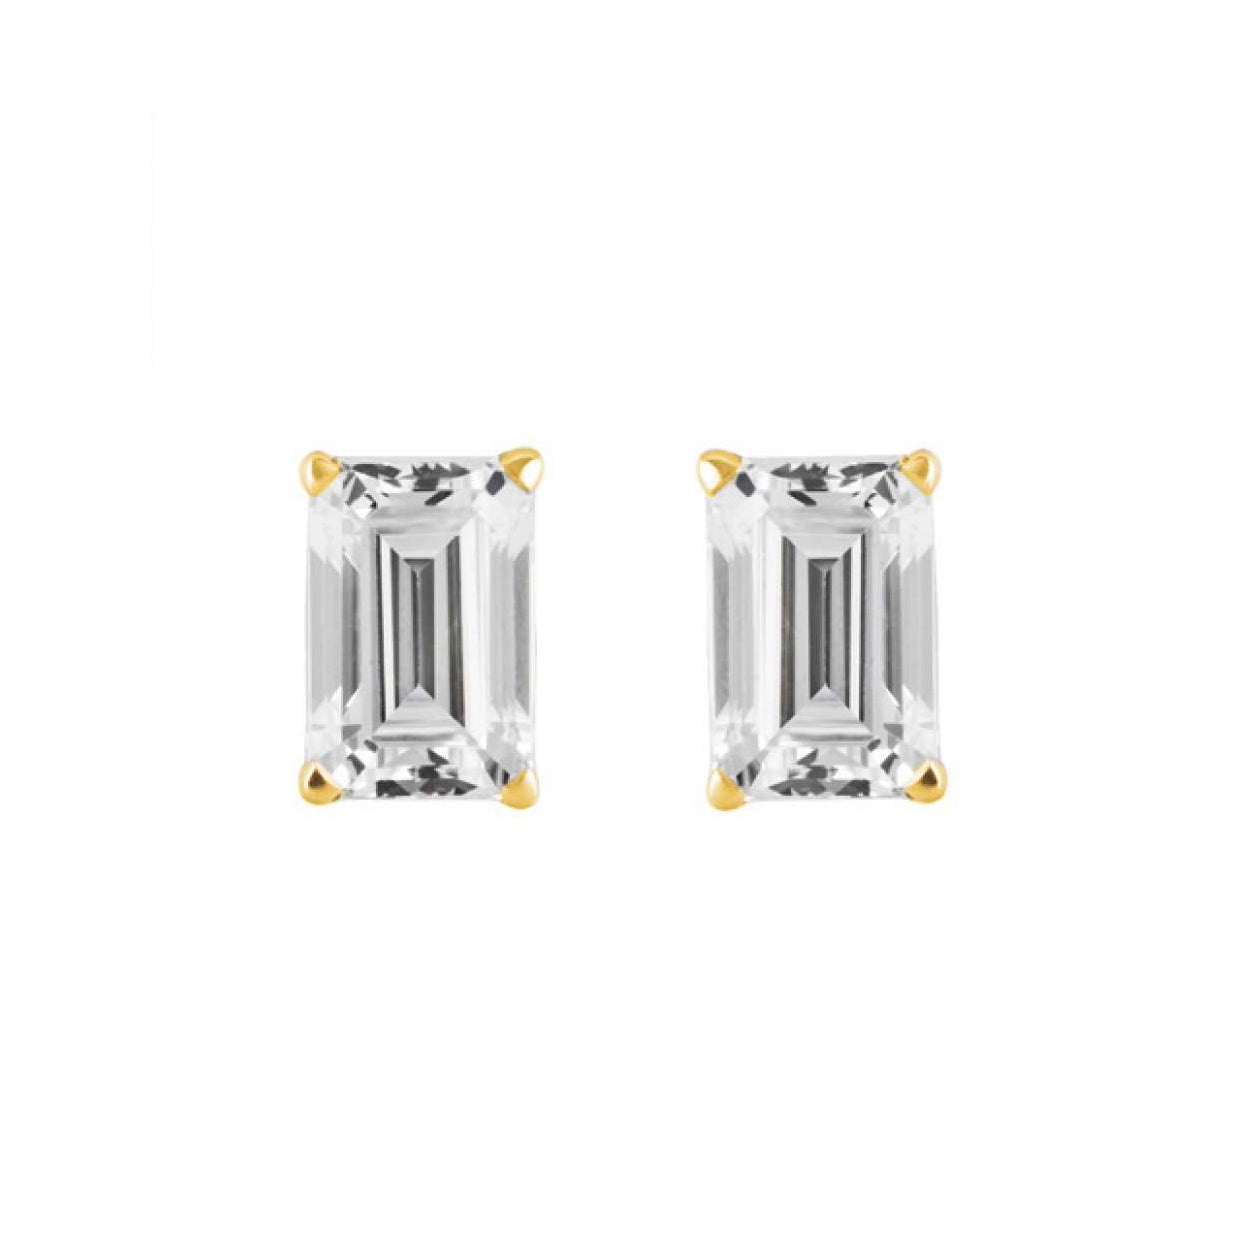 Emerald-cut diamond studs in 18ct yellow gold